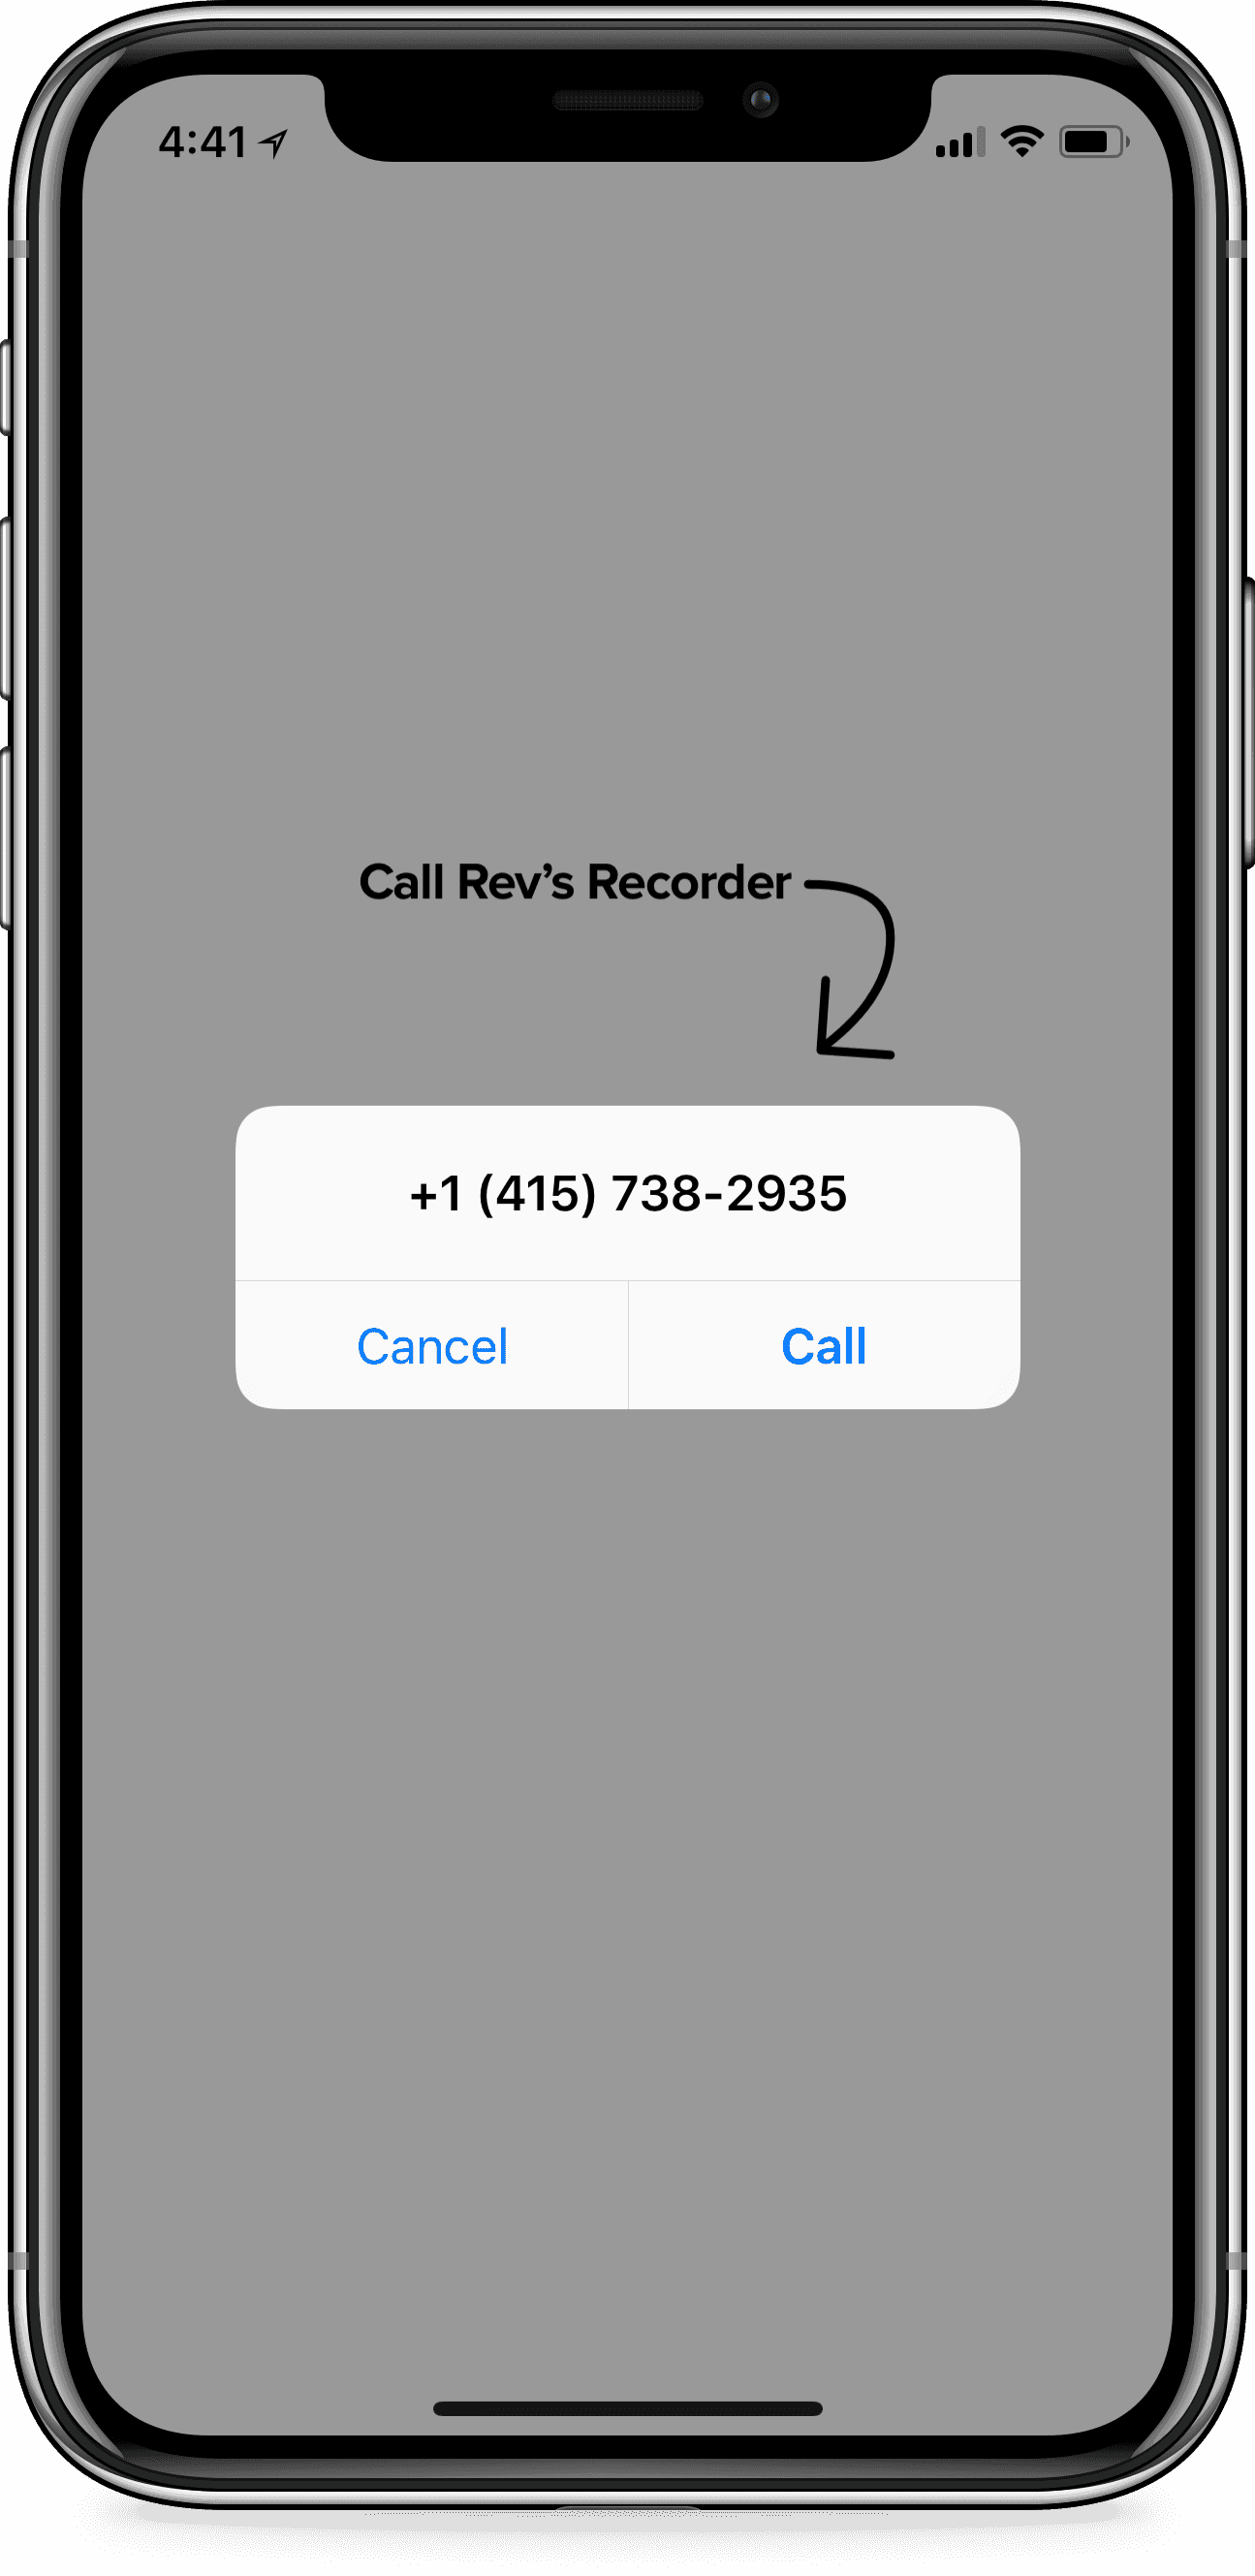 iPhone使用Rev Call Recorder应用程序带有屏幕提示调用Revs Recorder